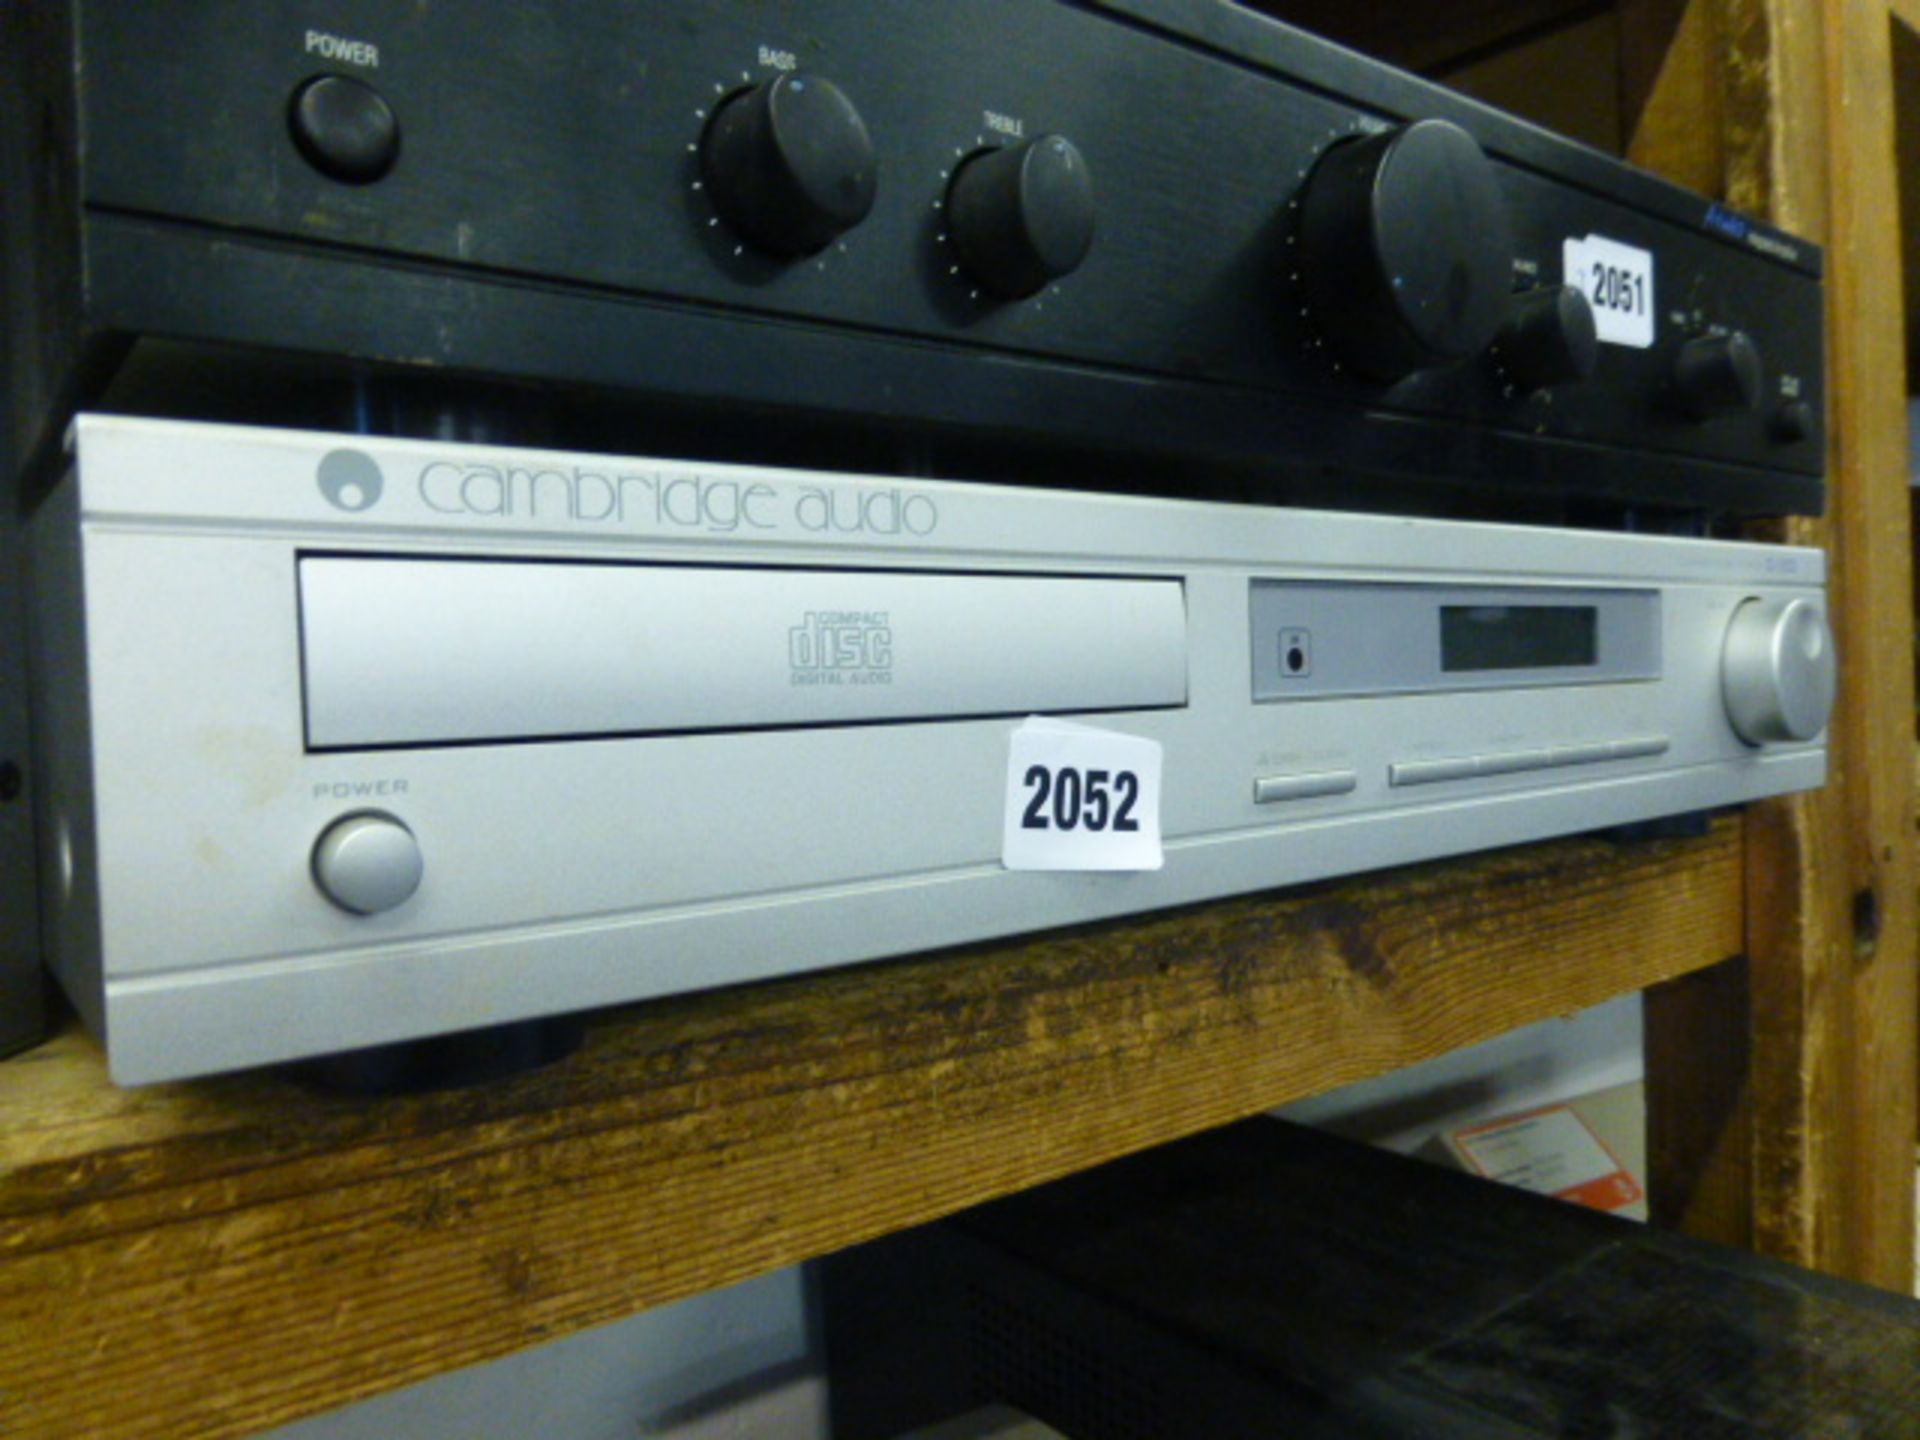 Cambridge audio cd player model t100